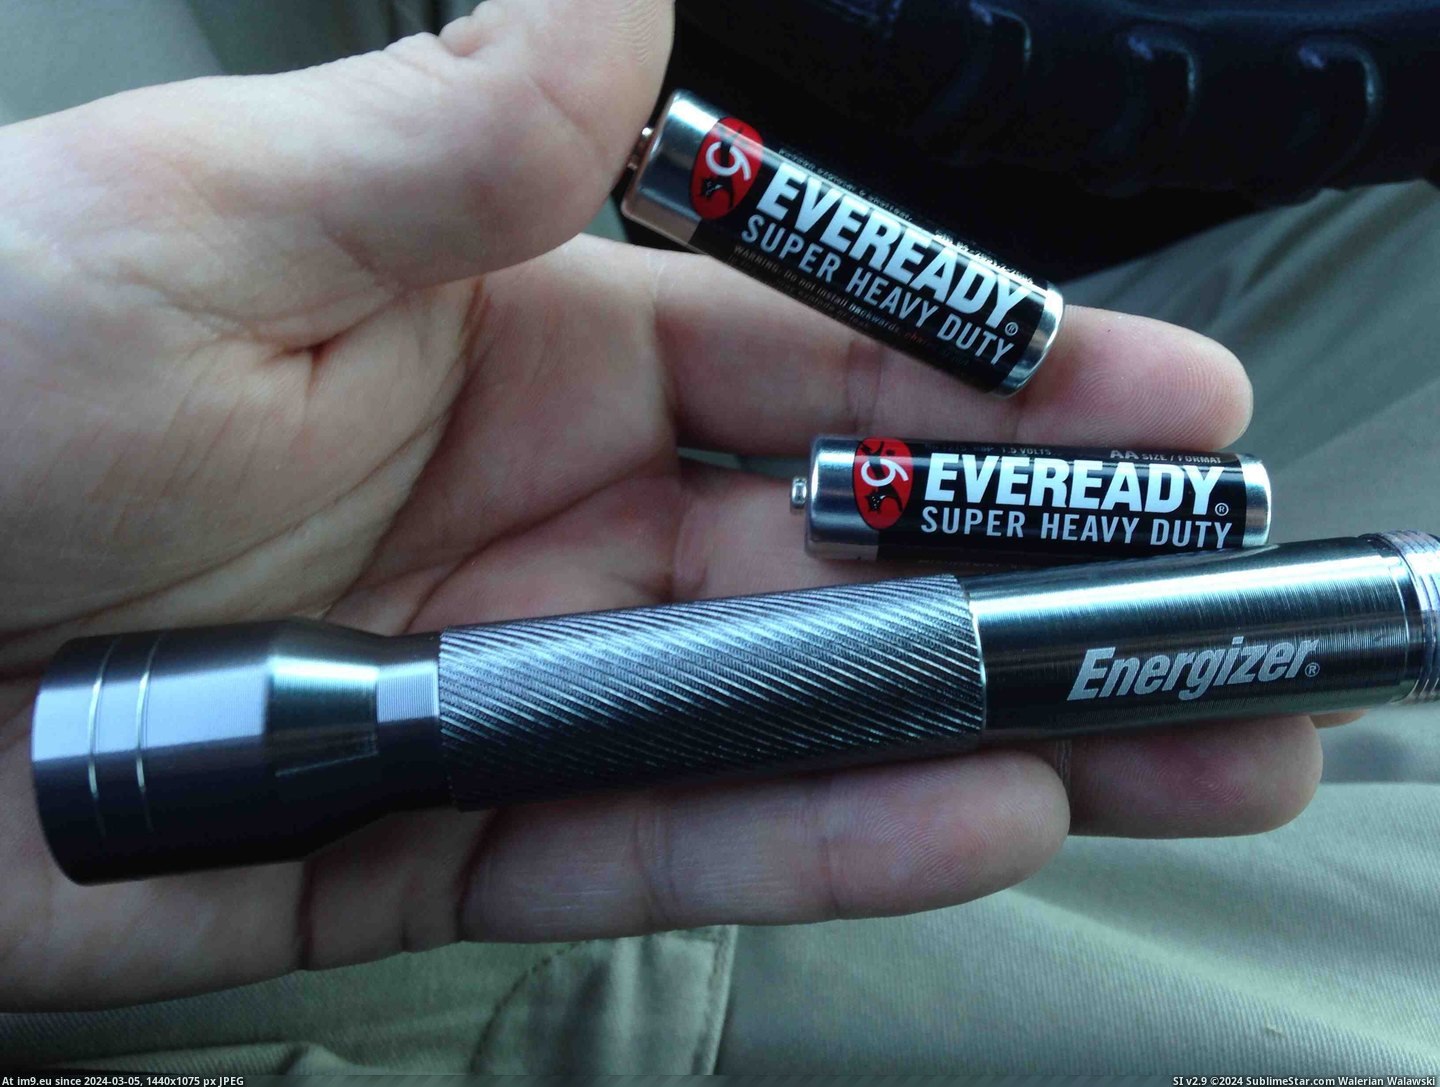 #Bought #Batteries #Eveready #Flashlight #Energizer [Pics] bought an energizer flashlight, it came with eveready batteries Pic. (Obraz z album My r/PICS favs))